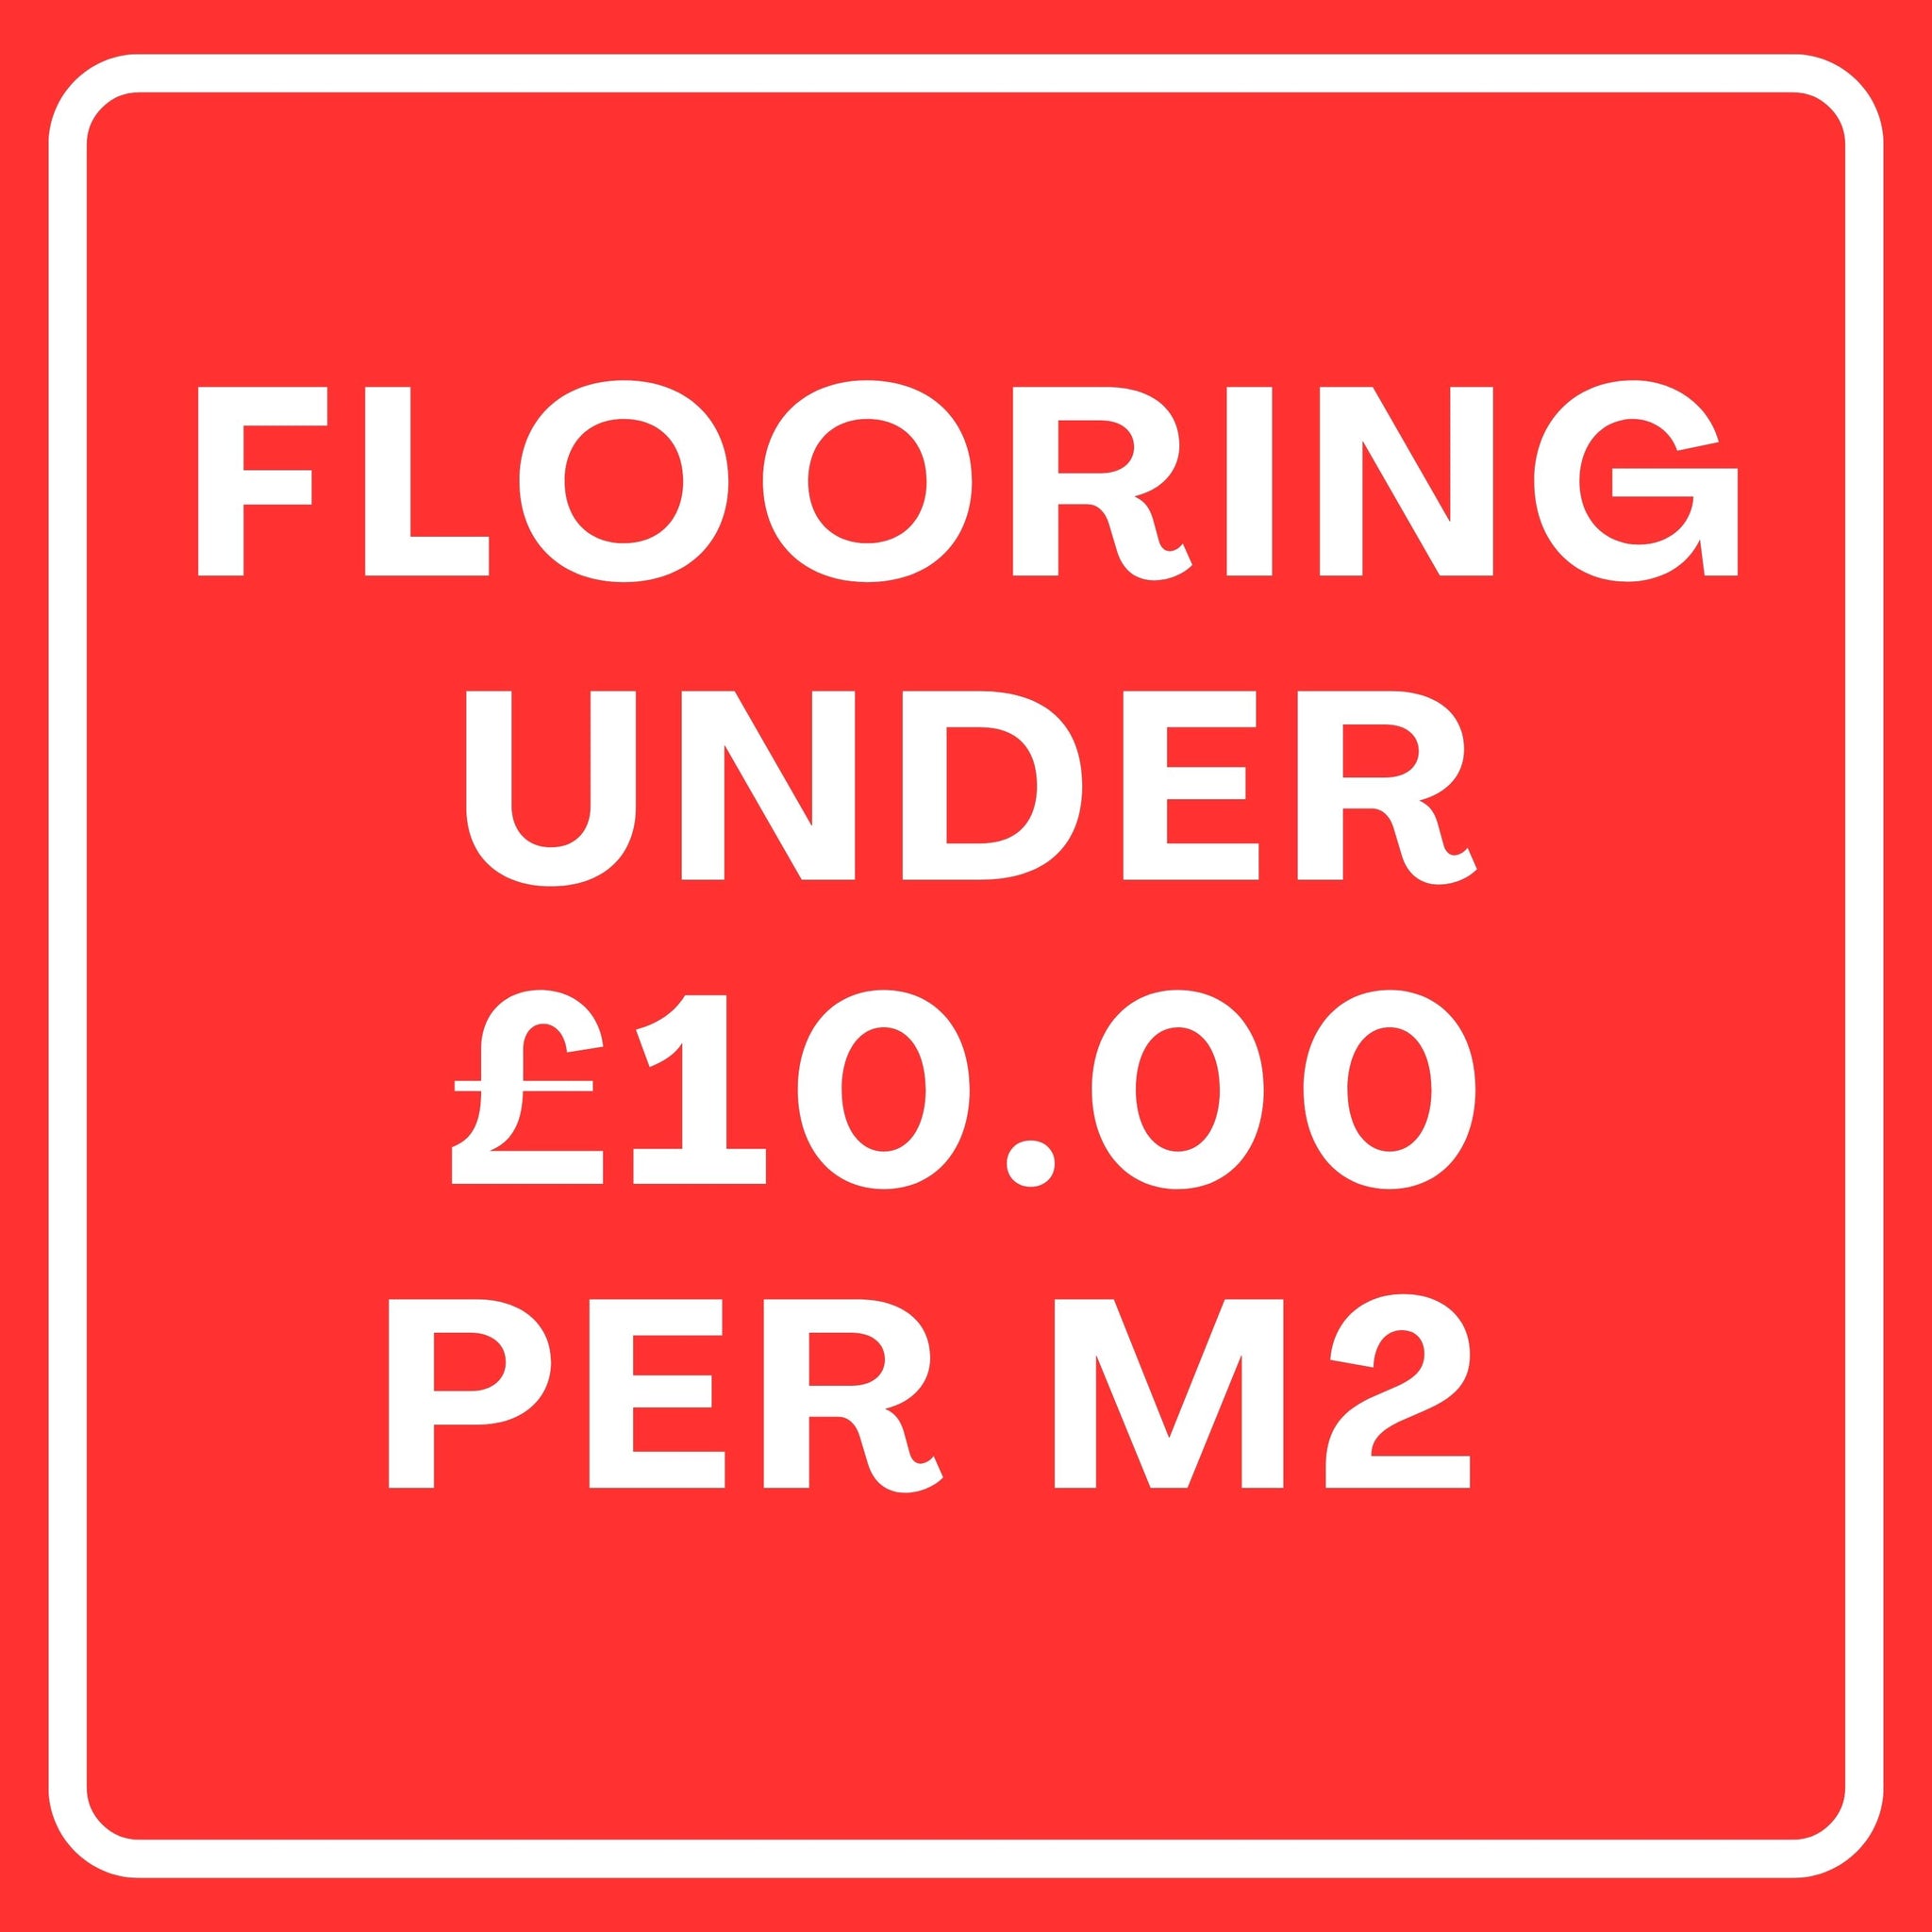 Flooring under £10m2